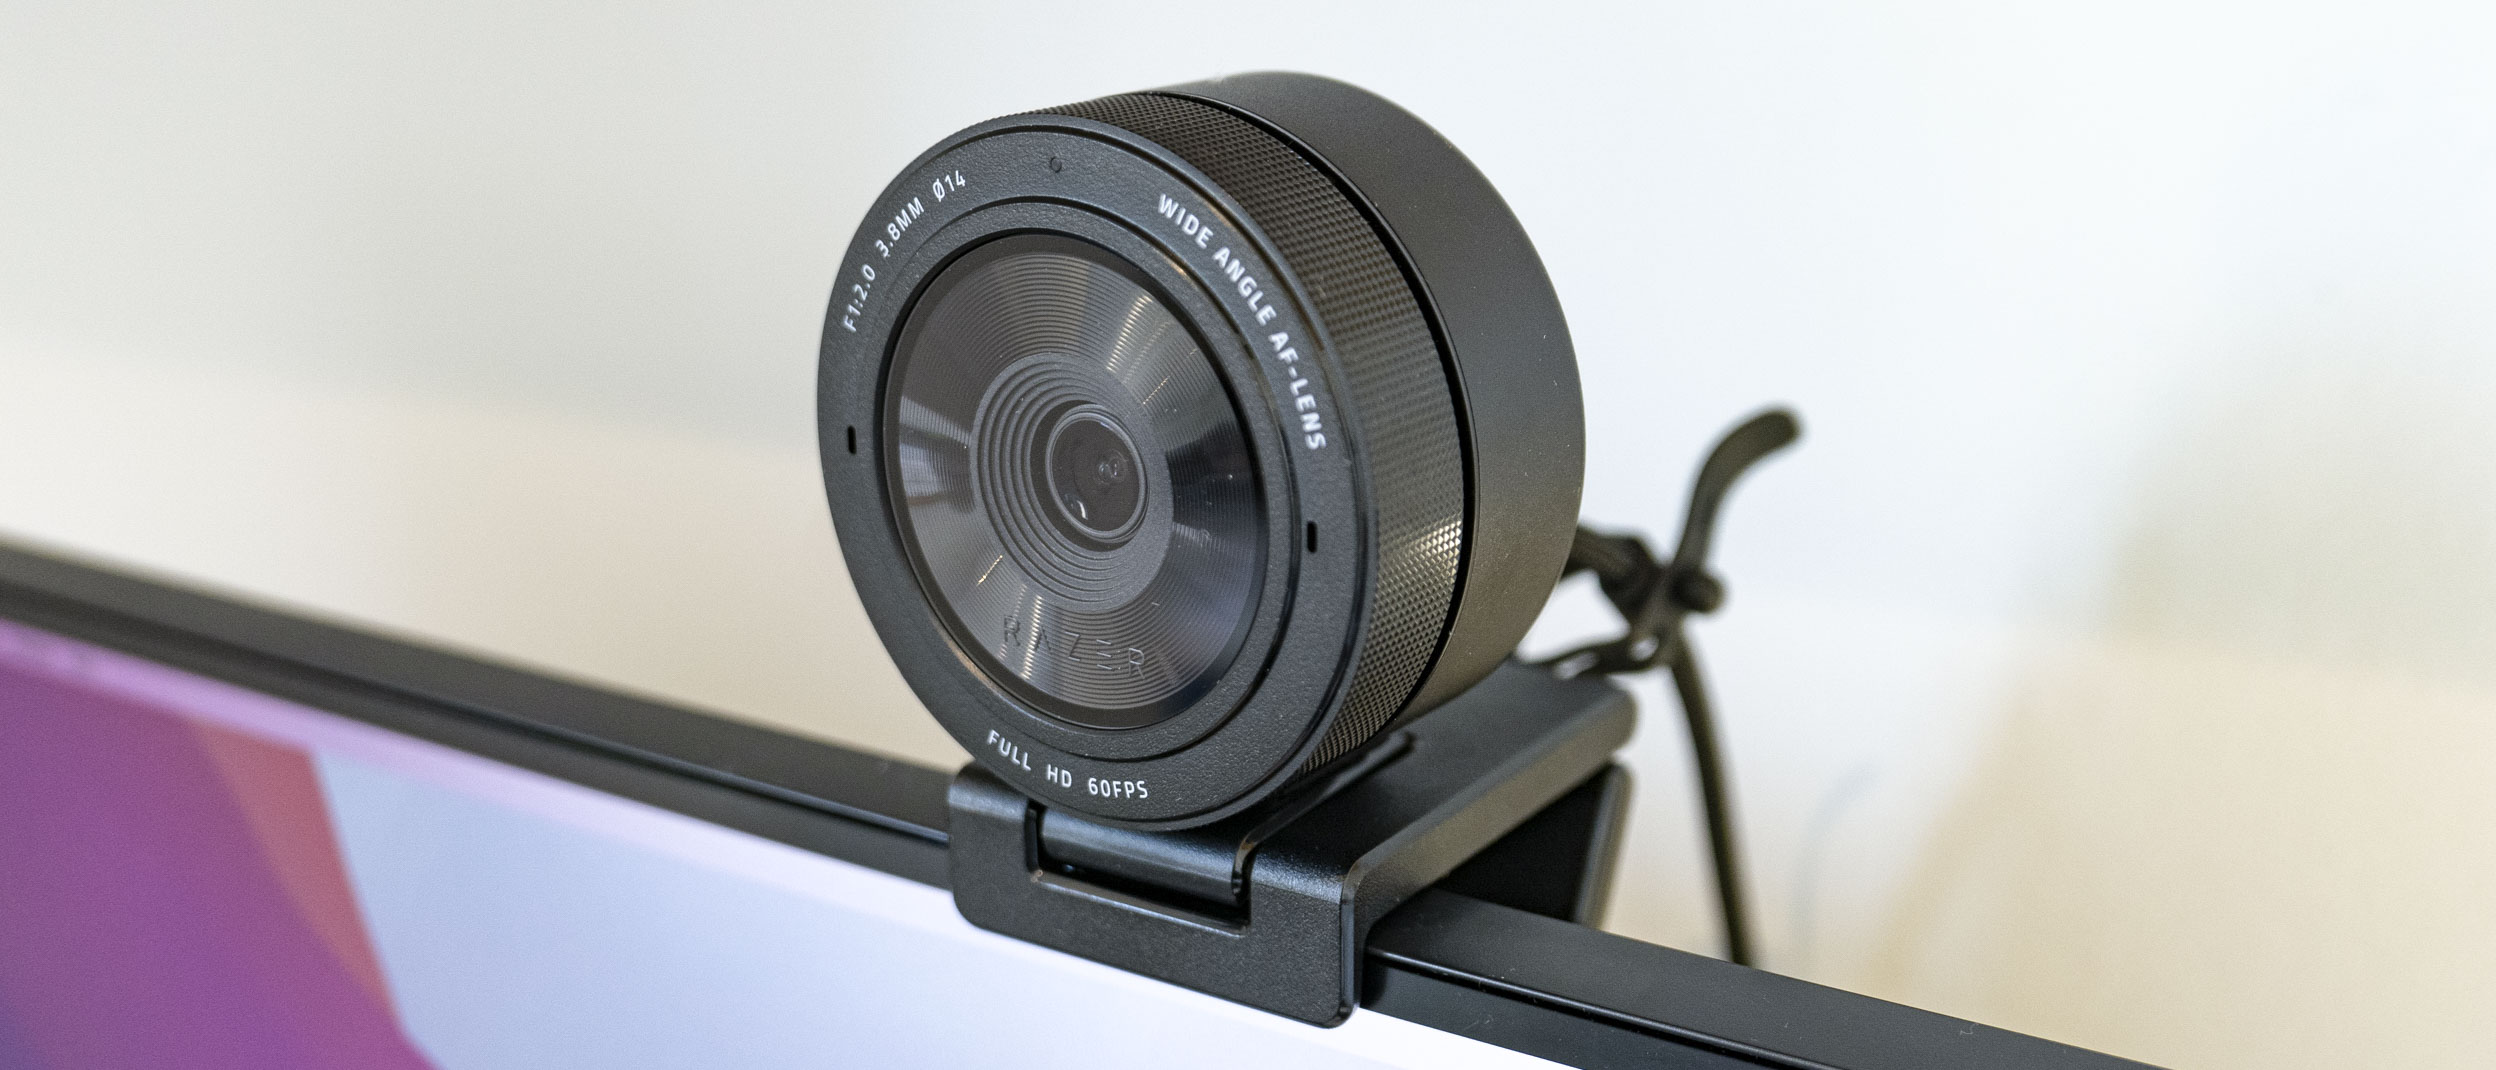 Streaming Webcam - The Razer Kiyo Range